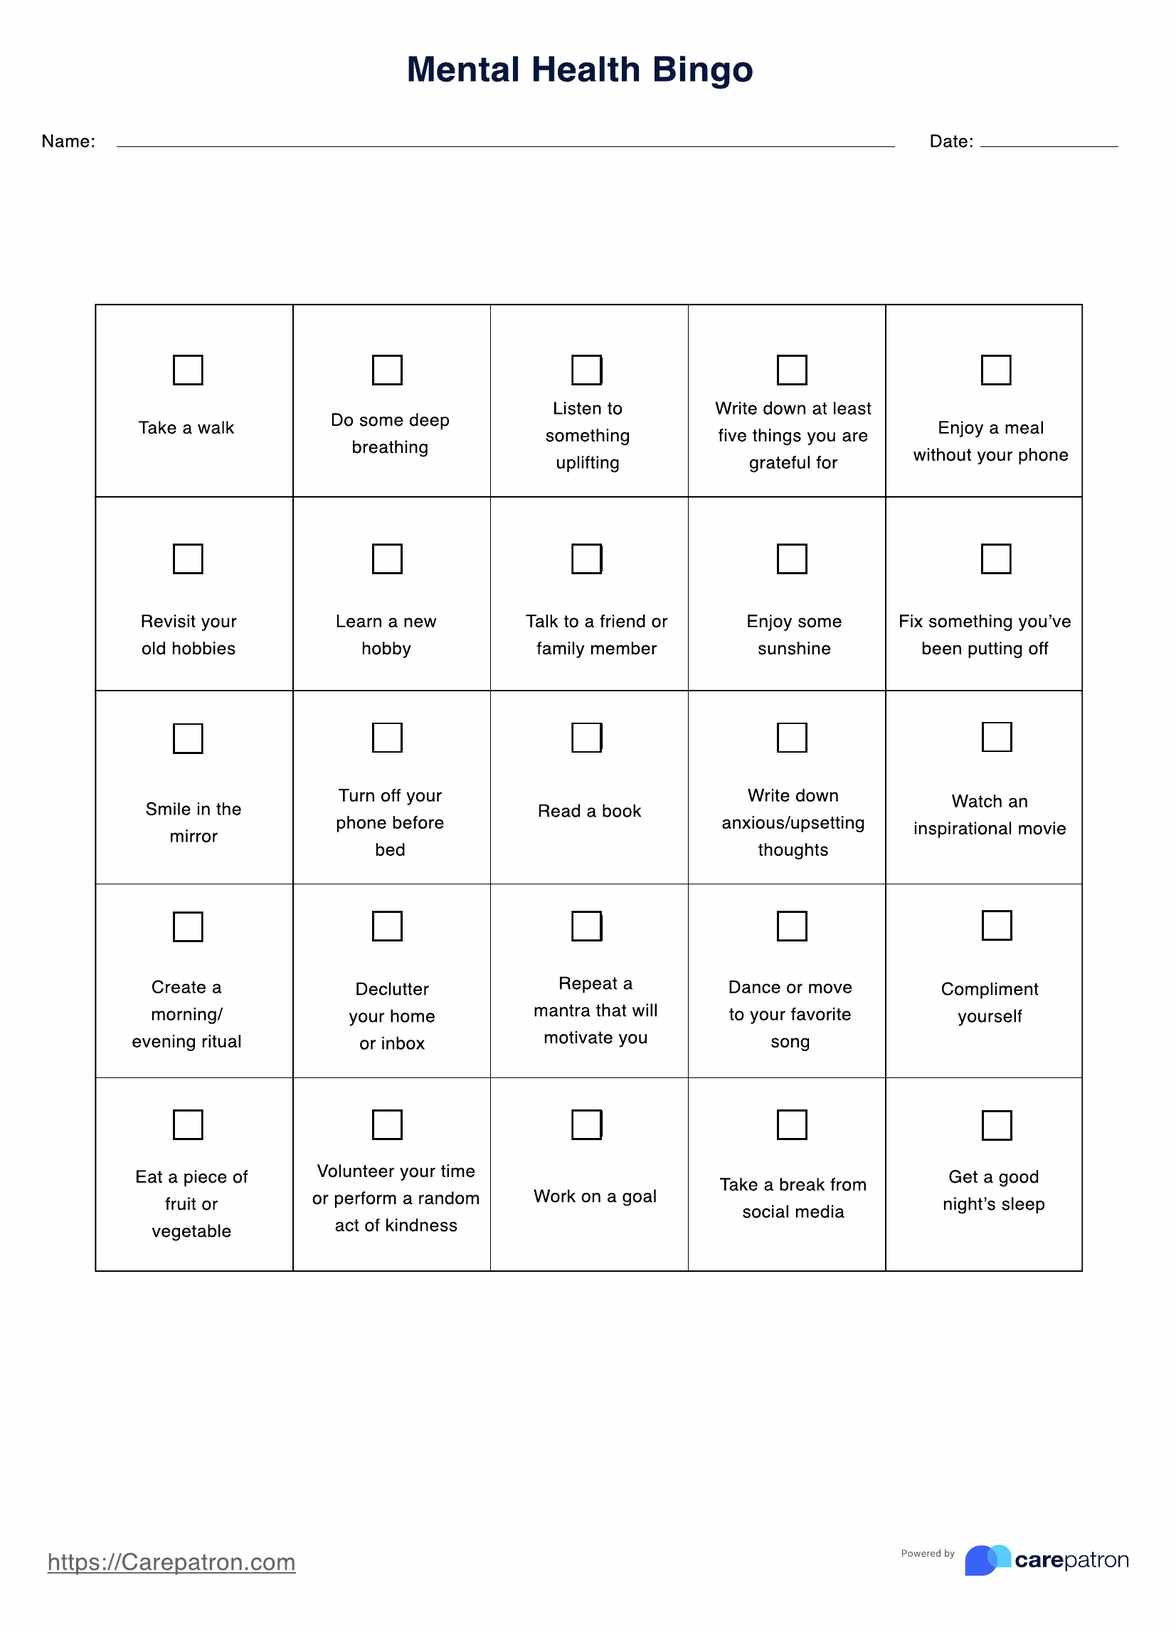 Mental Health Bingo PDF Example